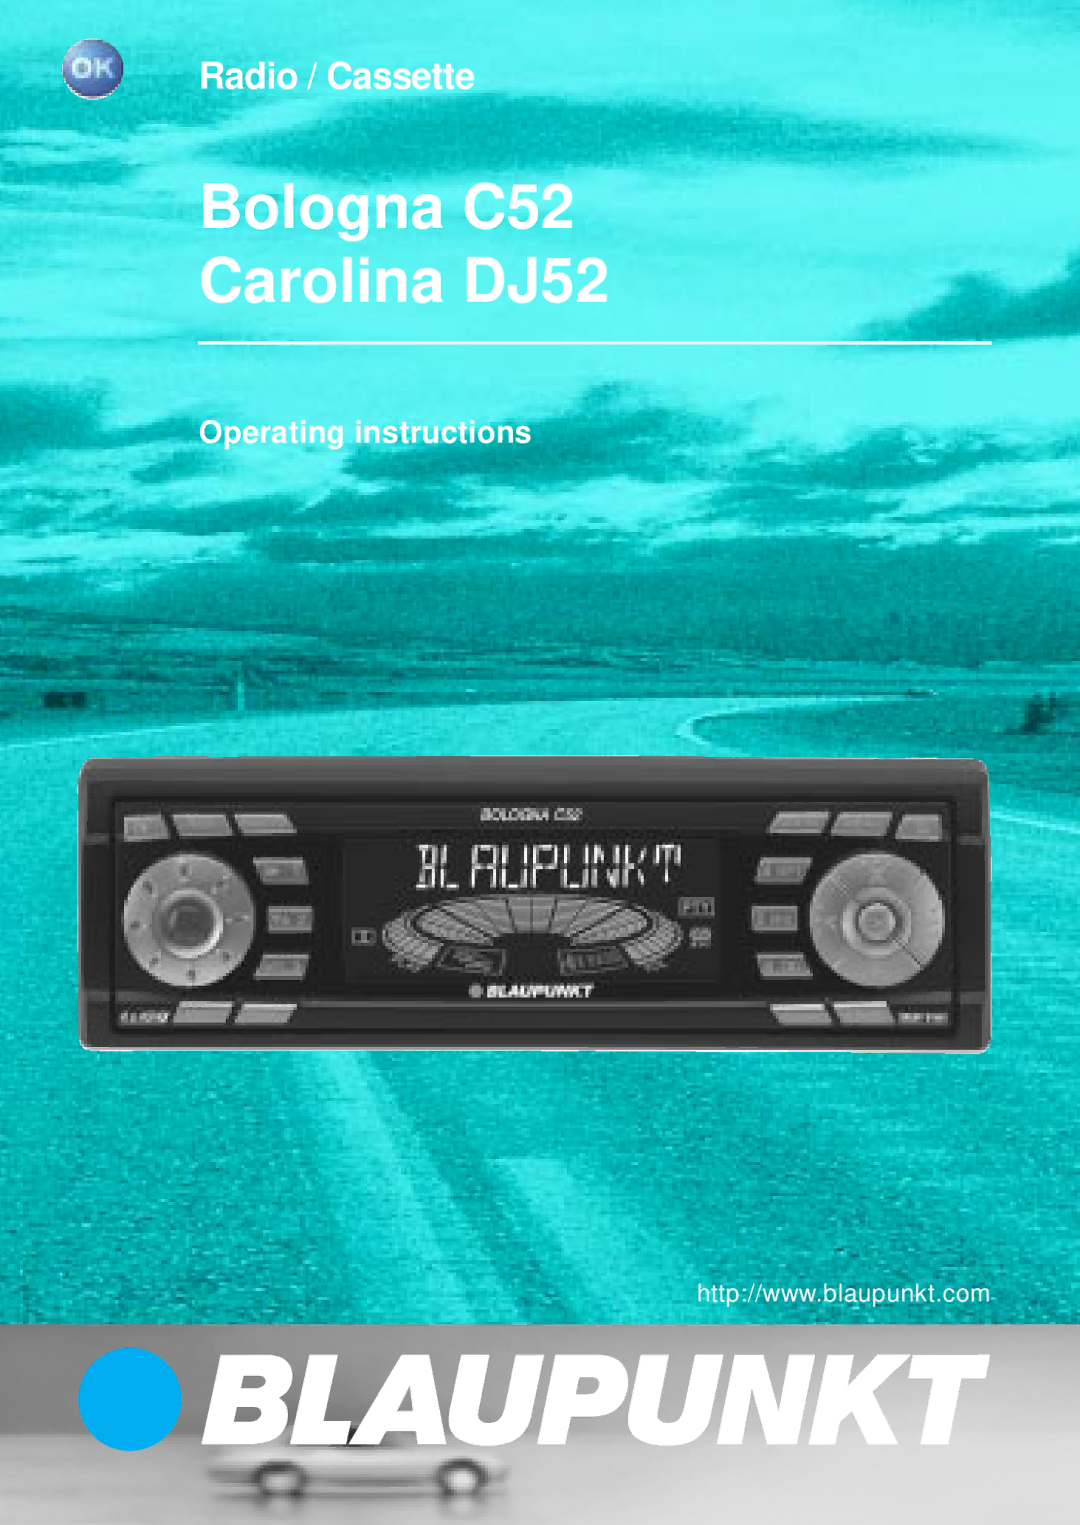 Blaupunkt operating instructions Bologna C52 Carolina DJ52 